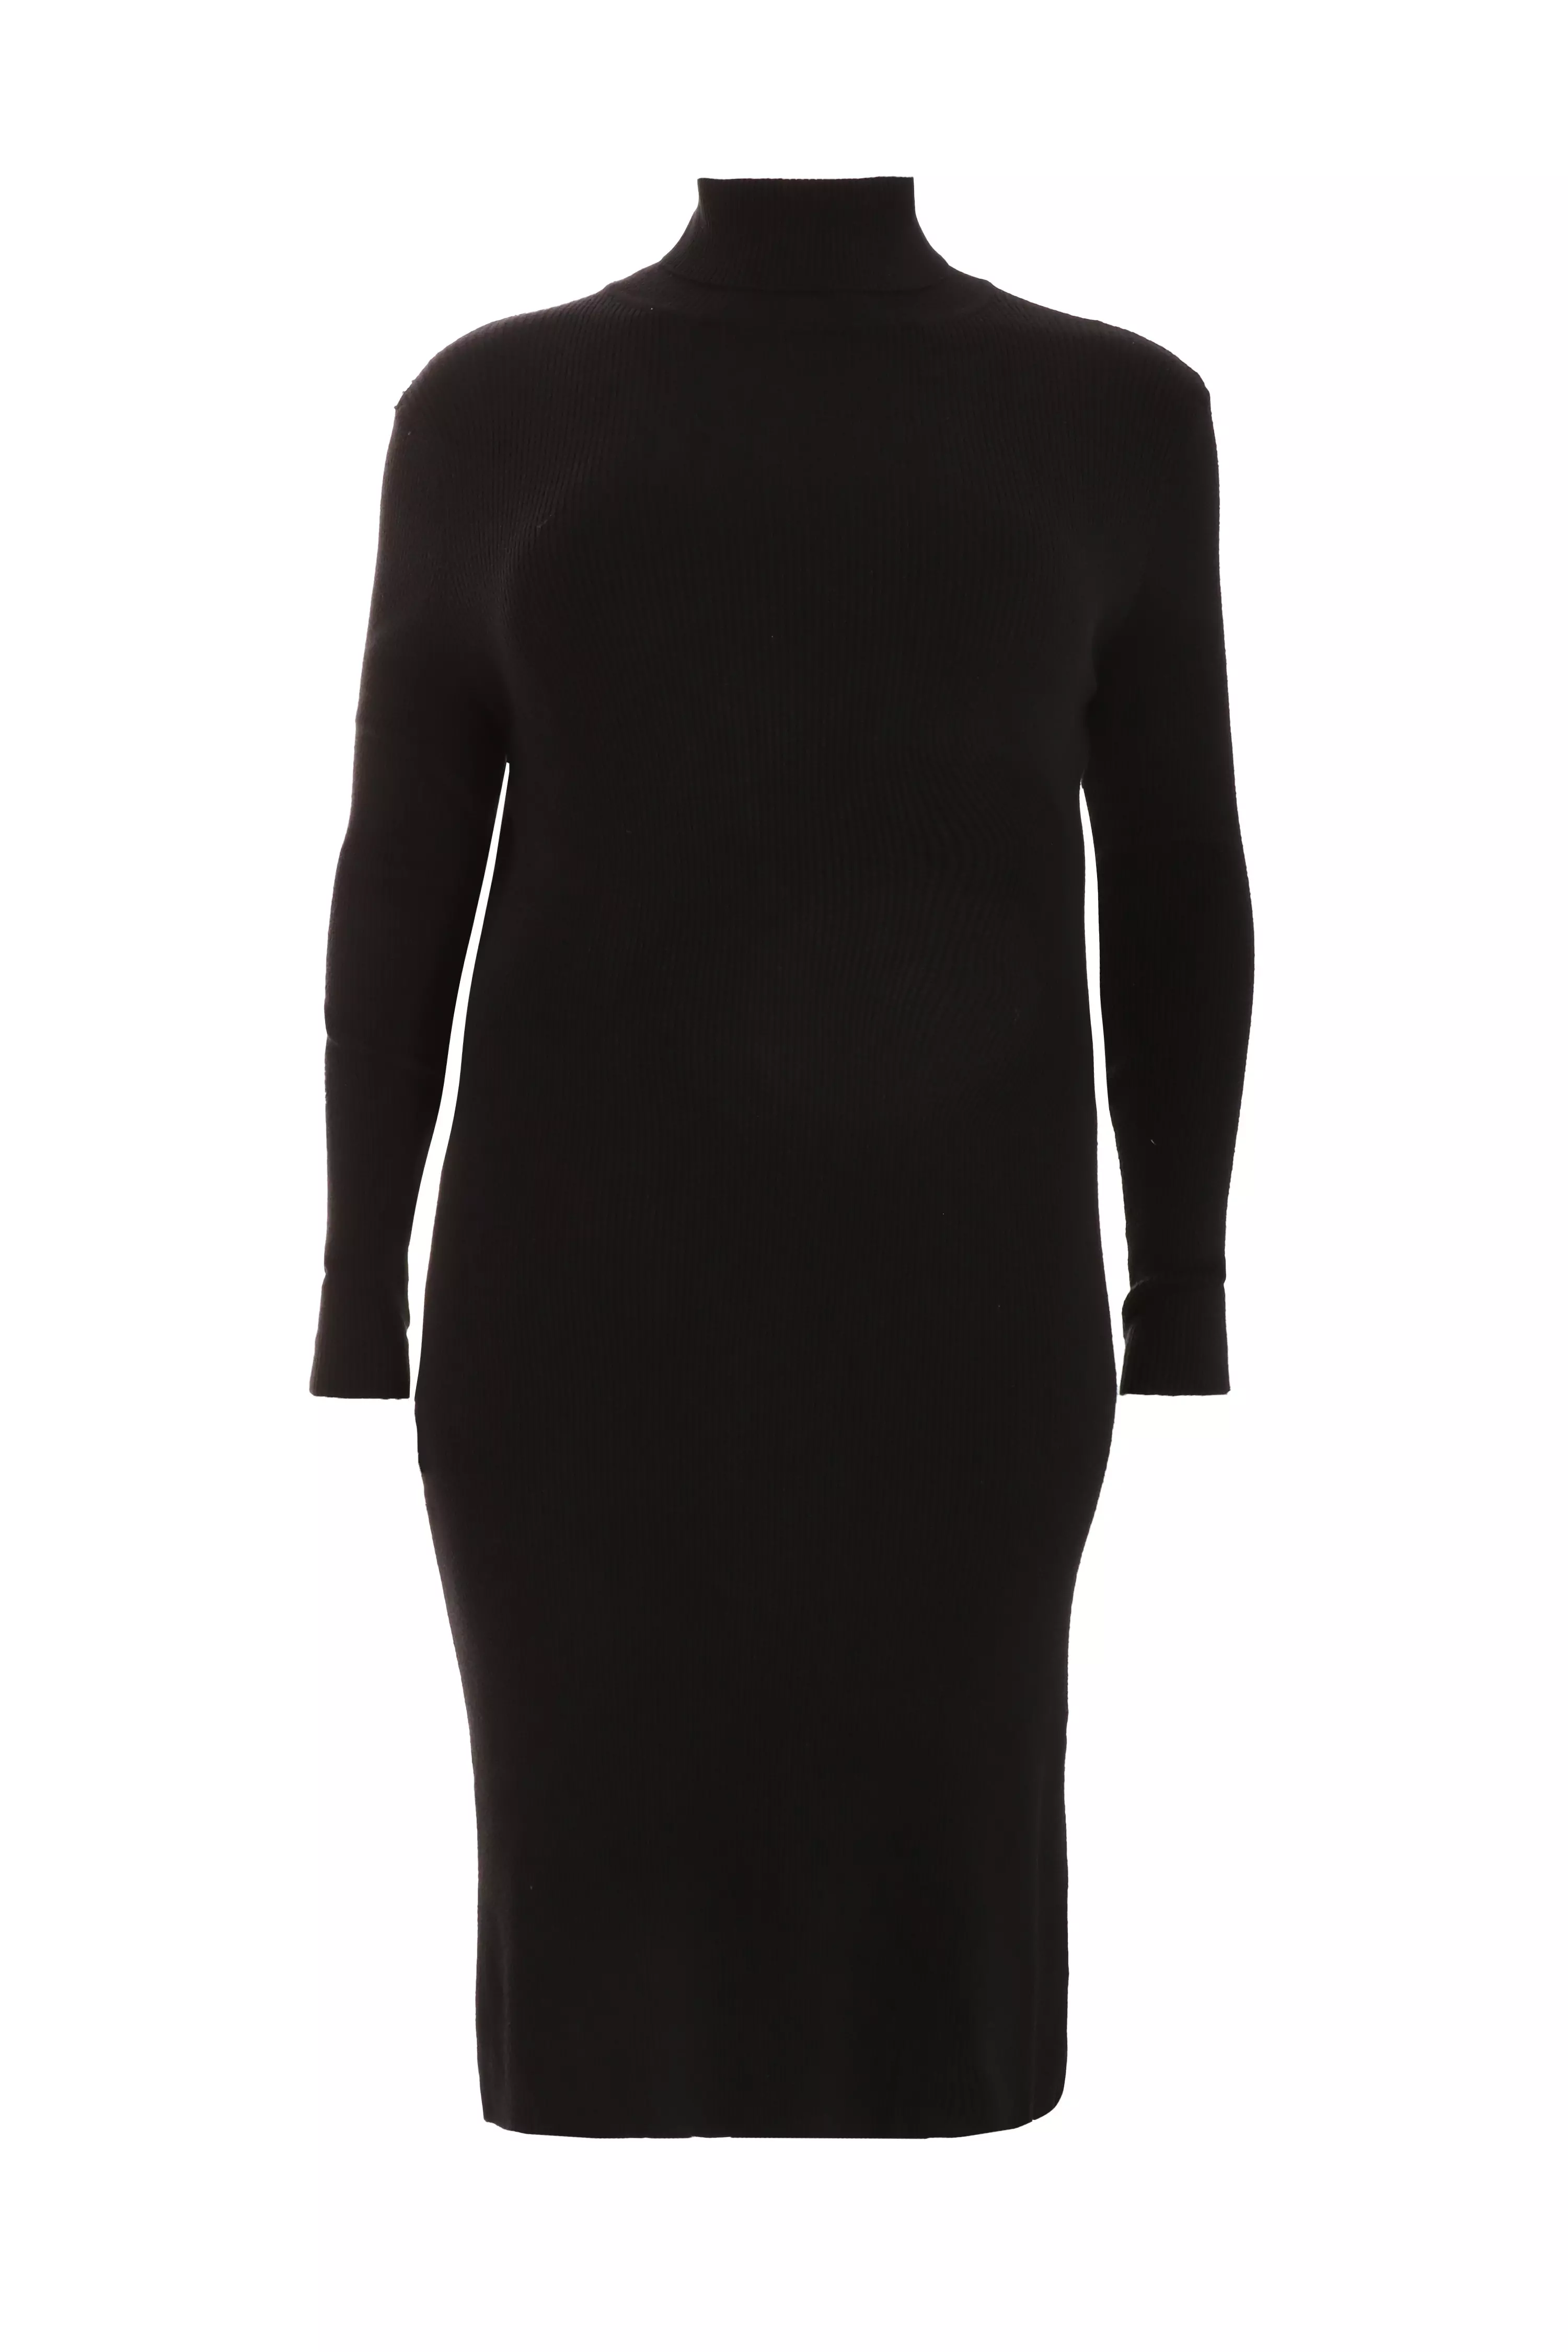 Curve Black Knit Long Sleeve Jumper Dress